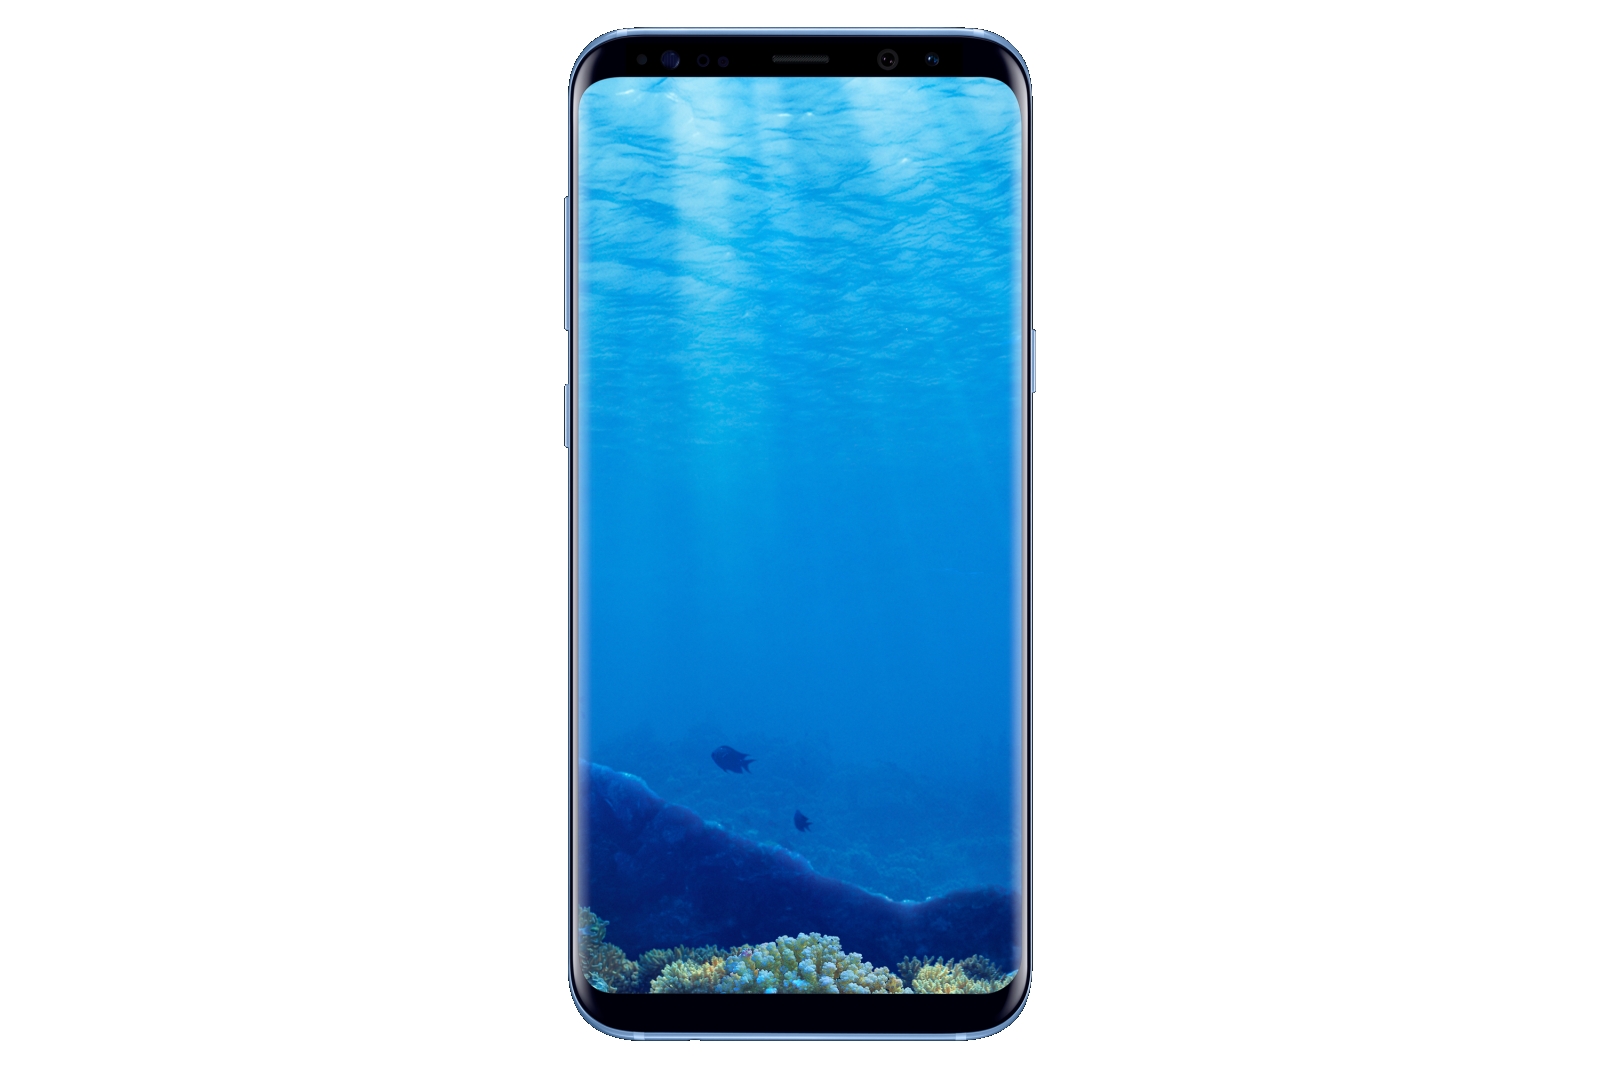 Samsung Galaxy S8+ Coral Blue